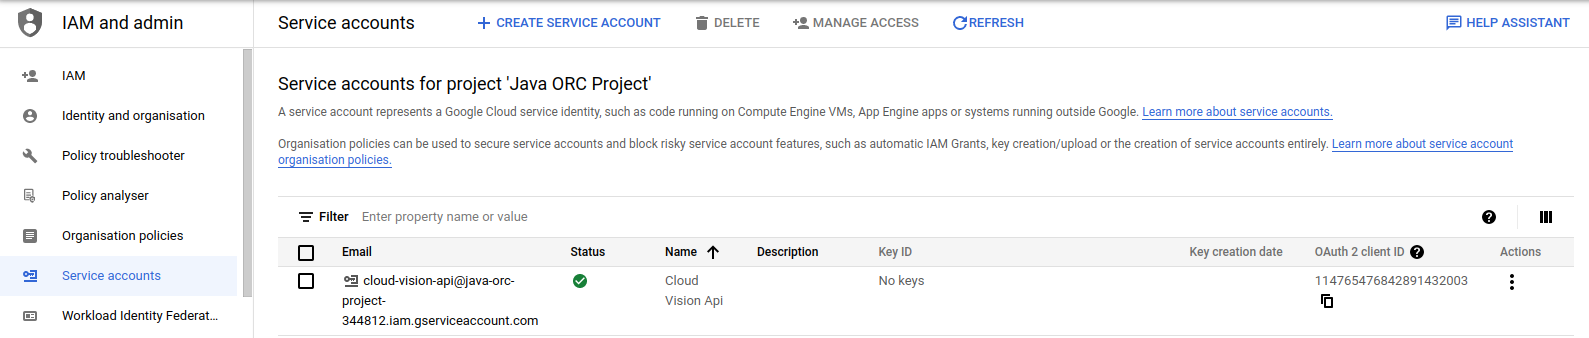 Service account details for Google Cloud Application